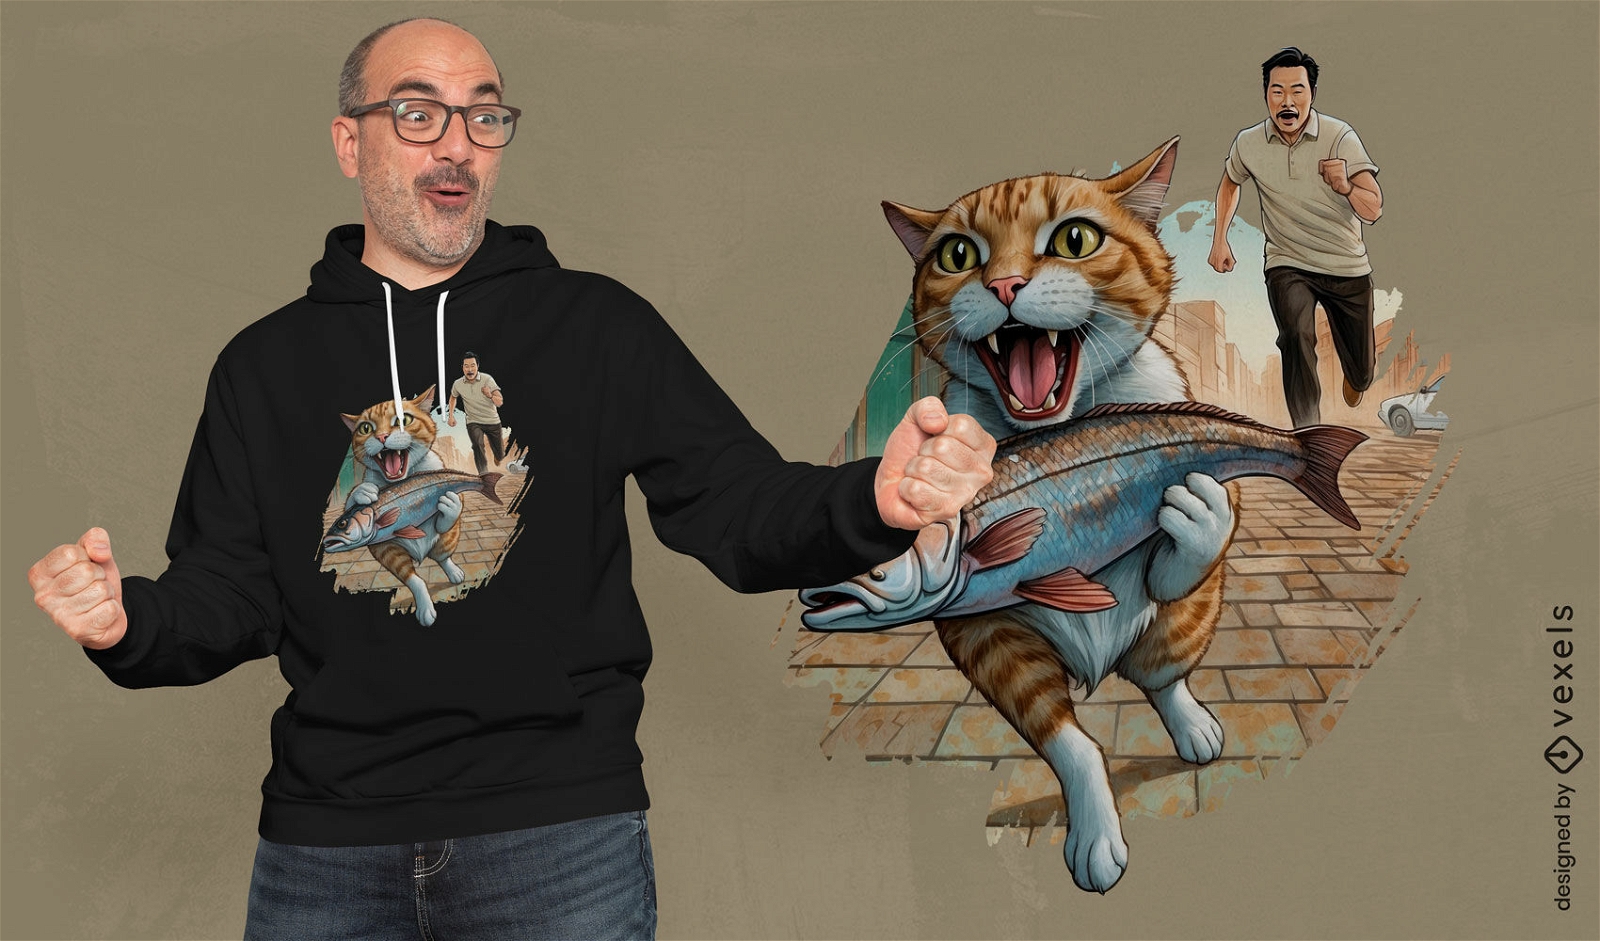 Comical cat and fish escape t-shirt design